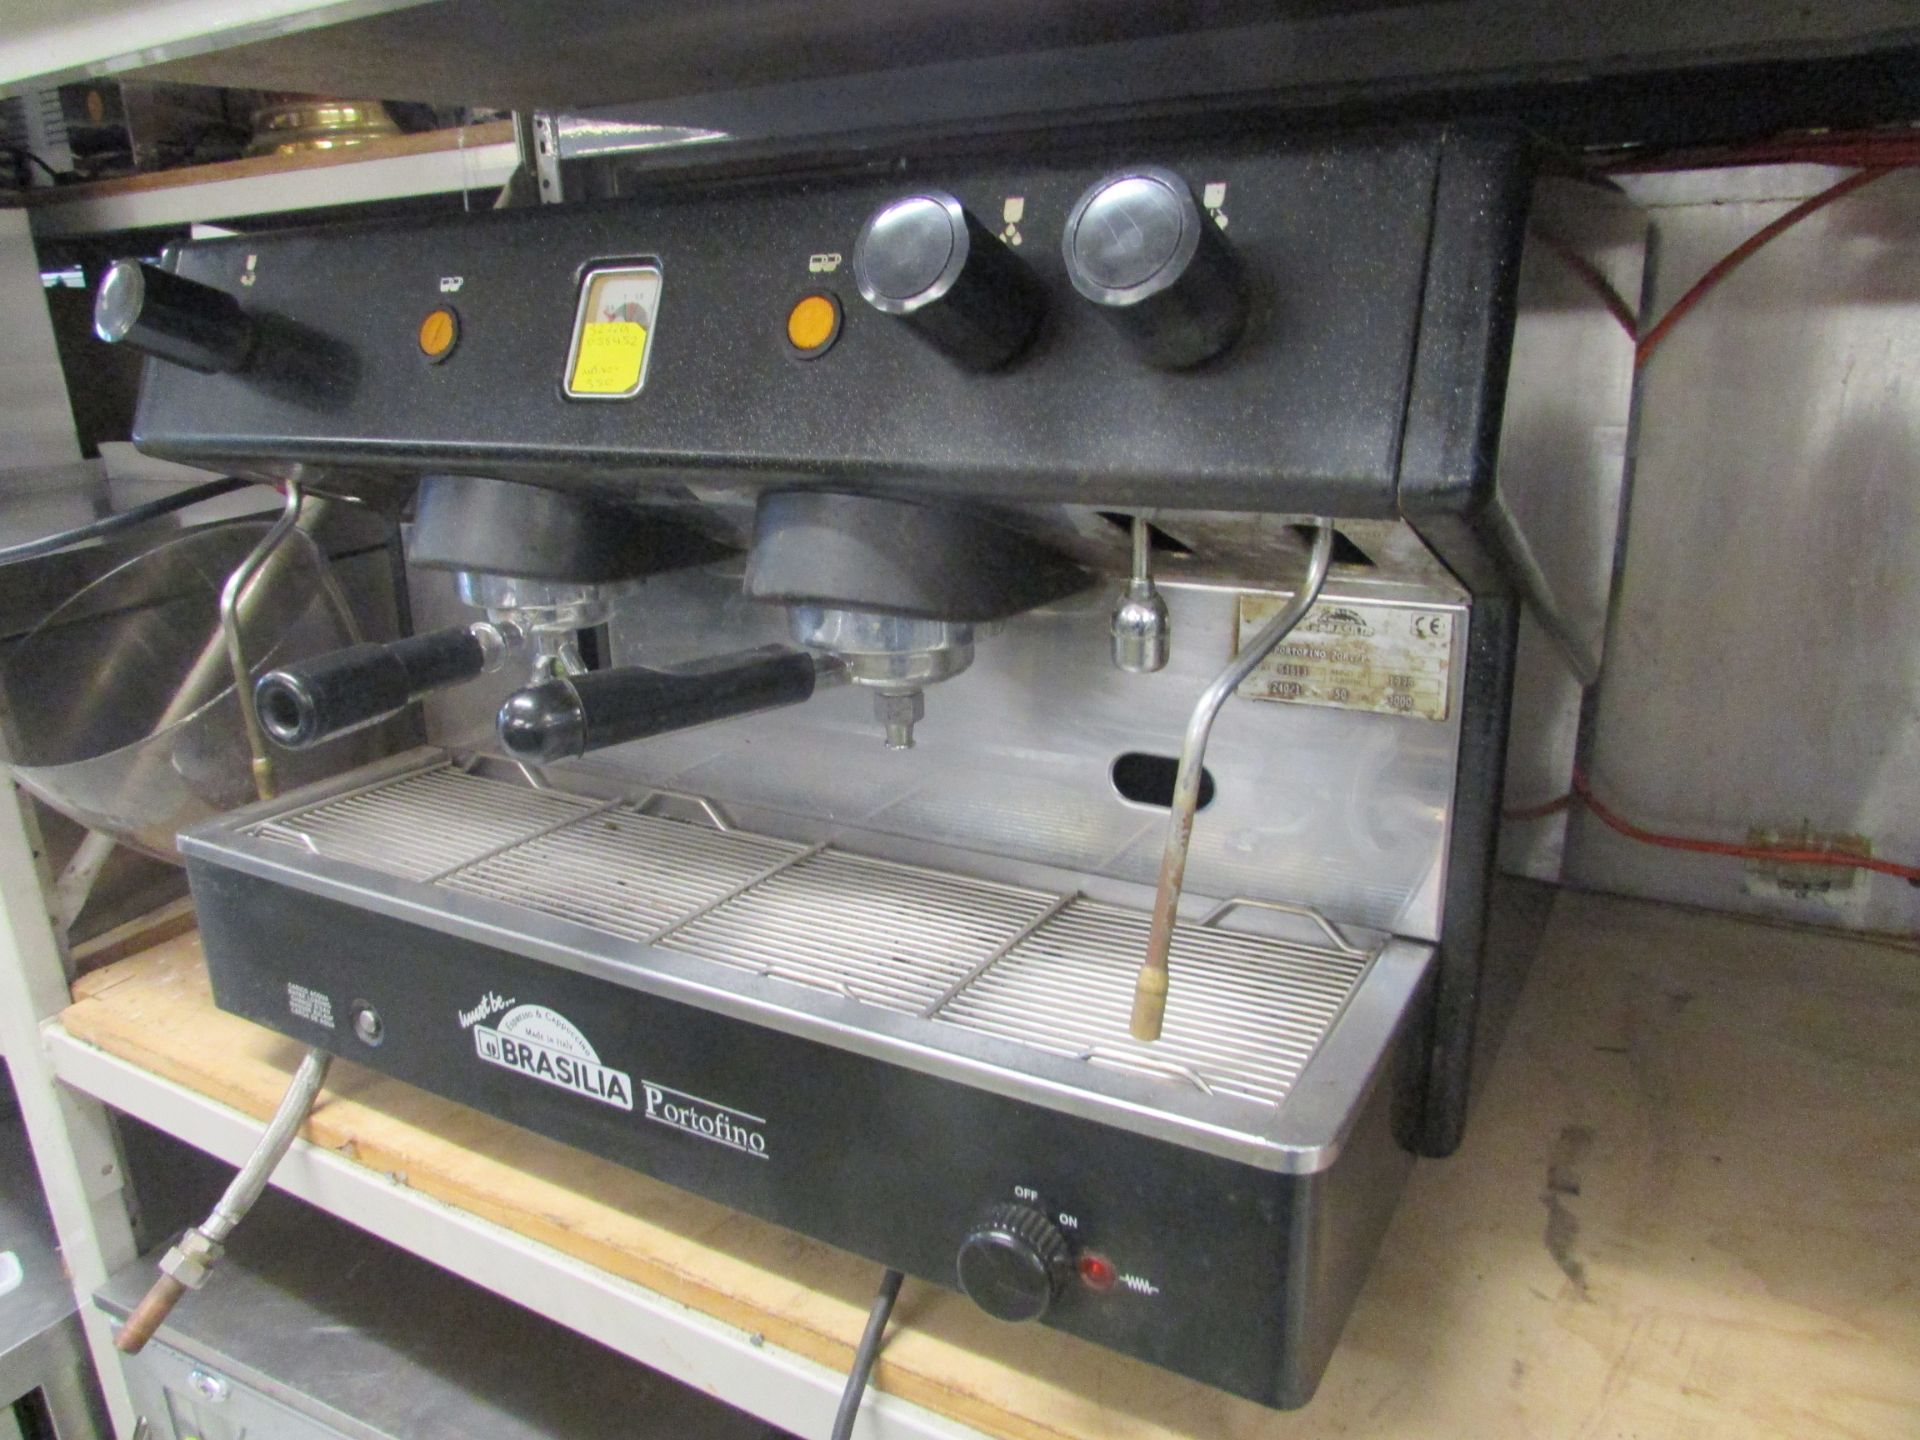 Brasilia Portofino 2 Group Espresso Coffee Machine (Tested & Working)